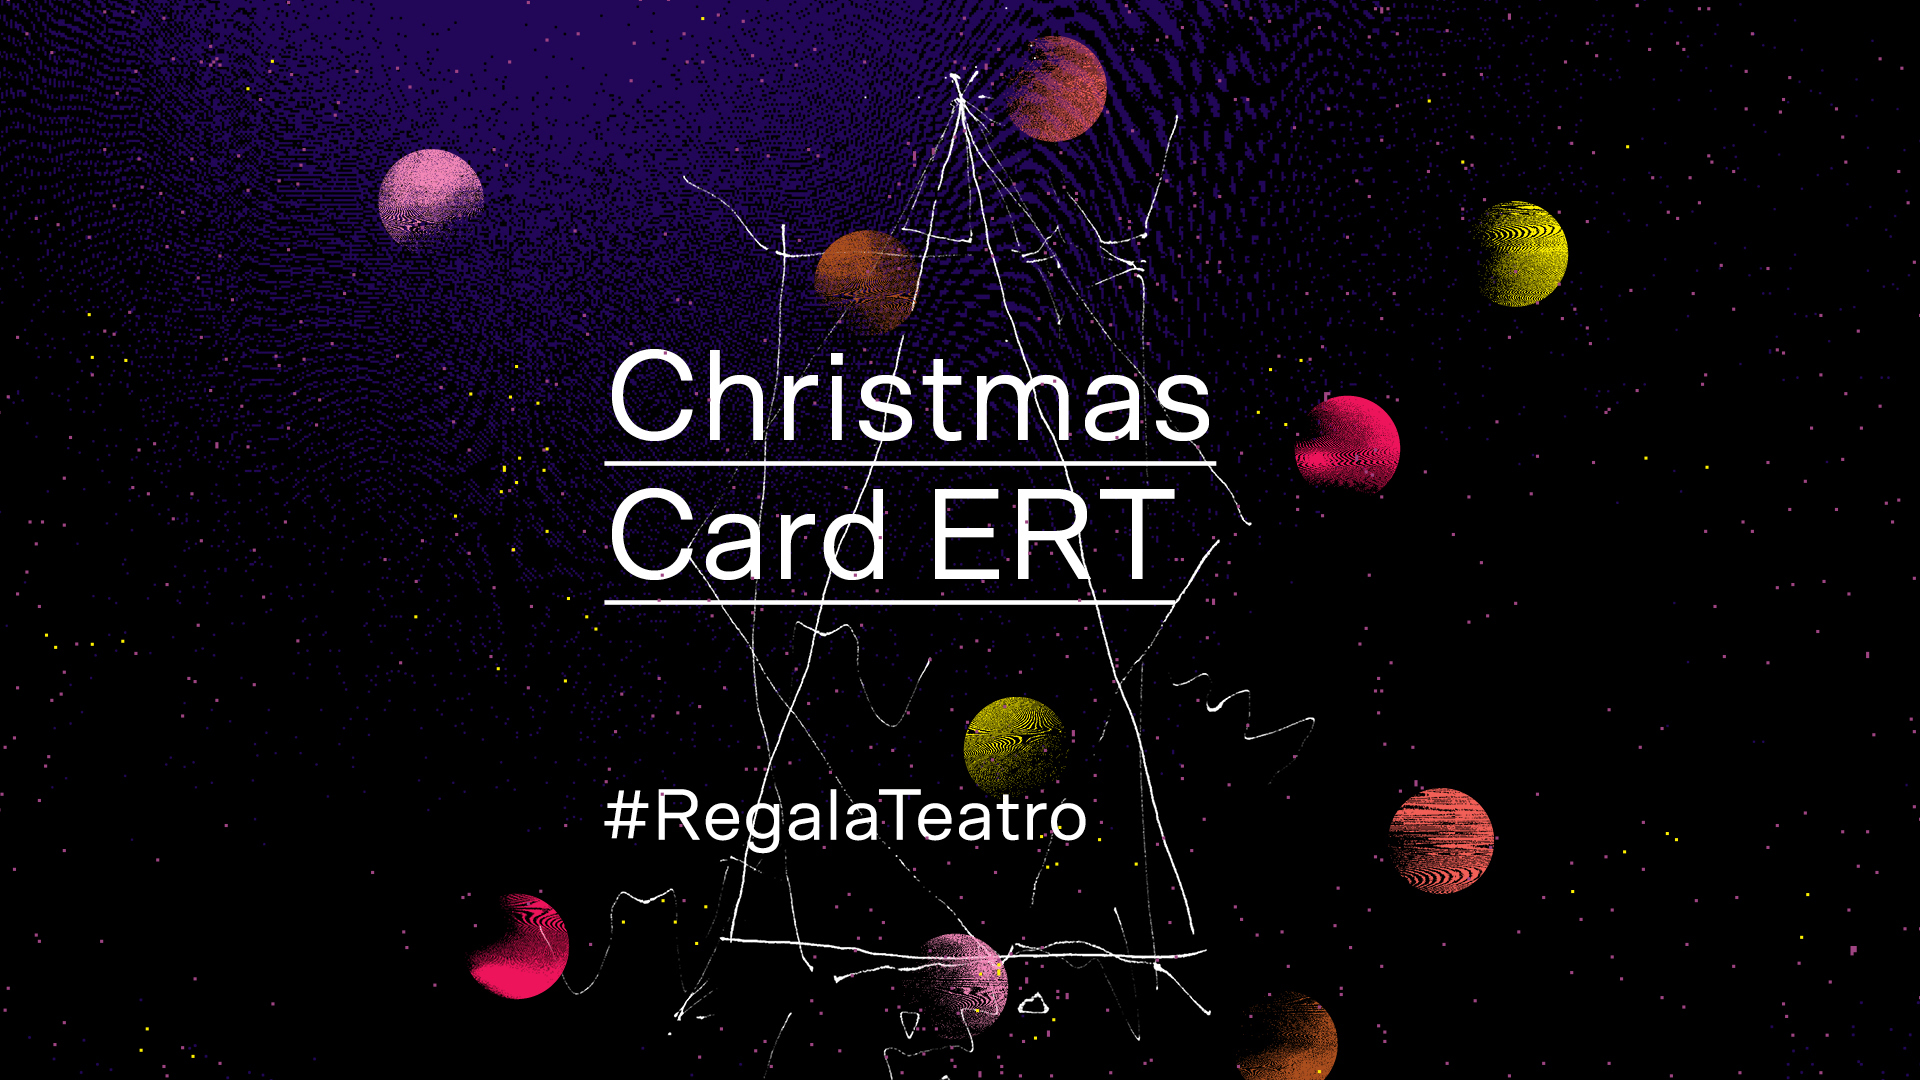 CHRISTMAS CARD ERT